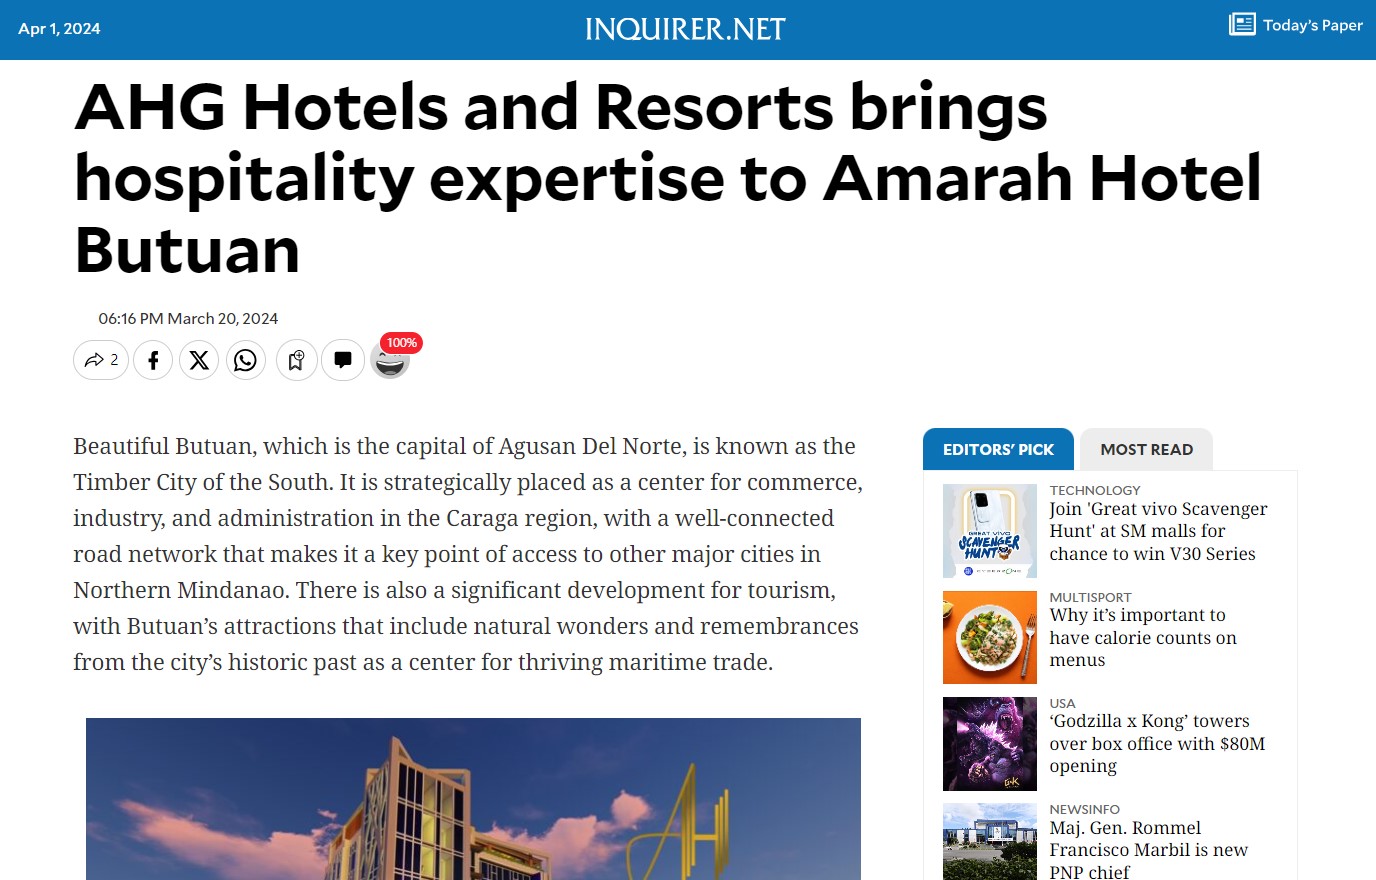 AHG Hotels and Resorts brings hospitality expertise to Amarah Hotel Butuan